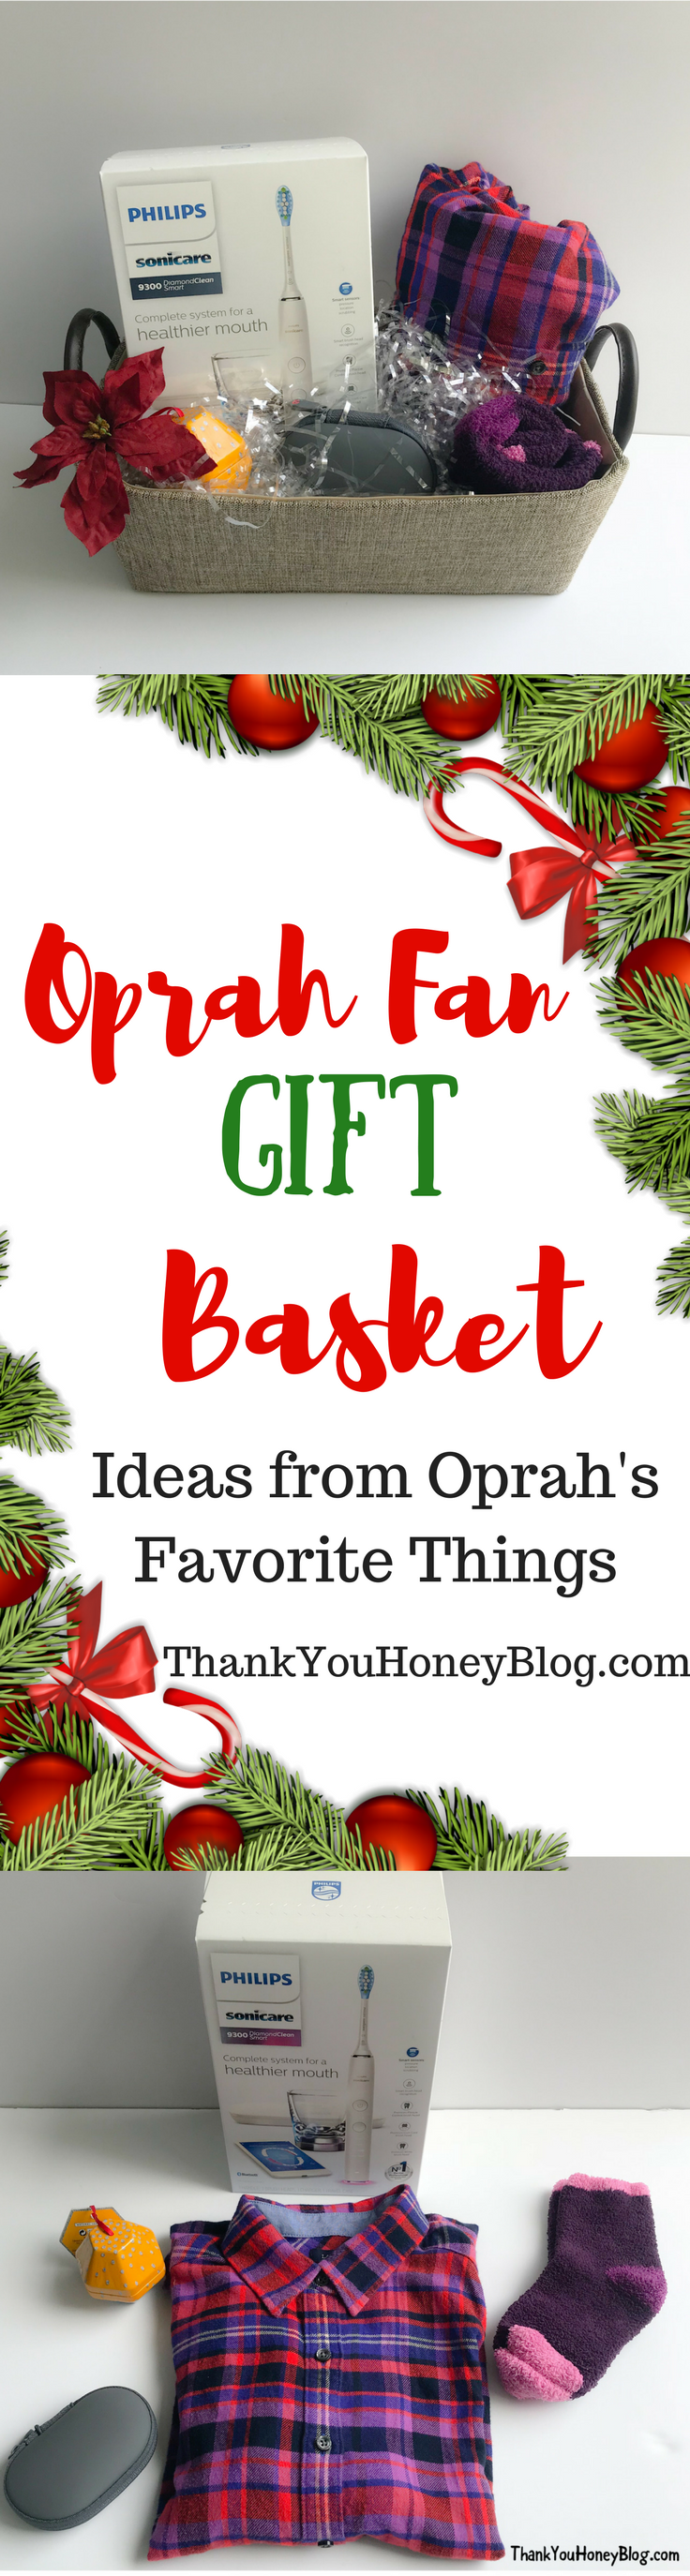 Oprah Fan Gift Basket #WorldsSmartestToothbrush #PhilipsSonicare #OprahsFavoriteThings #ad